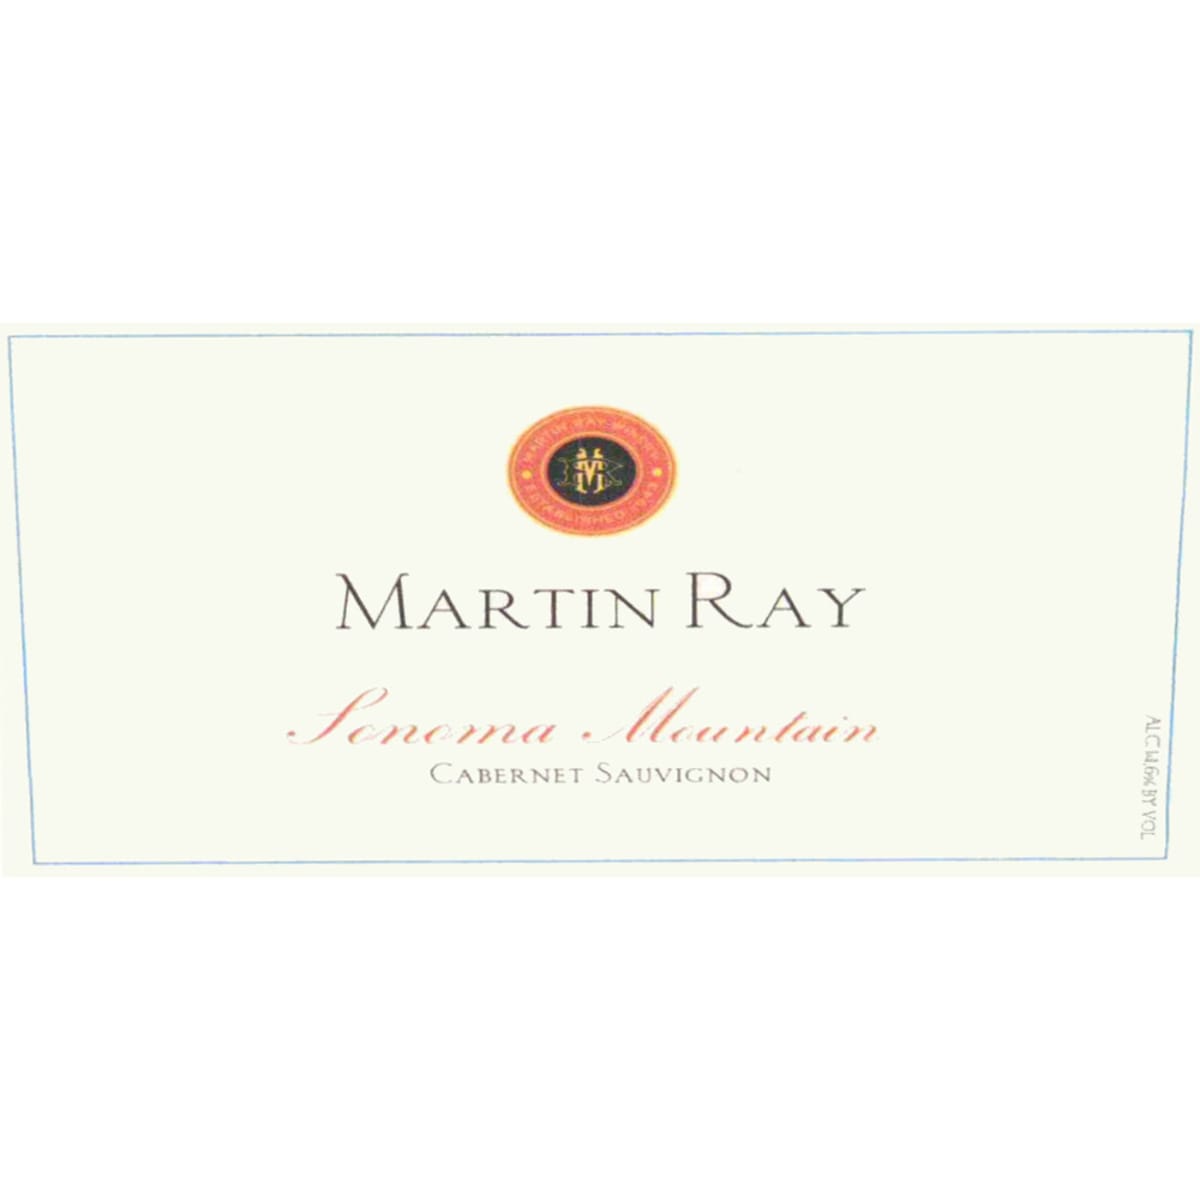 Martin Ray Sonoma Mountain Cabernet Sauvignon 2009 Front Label